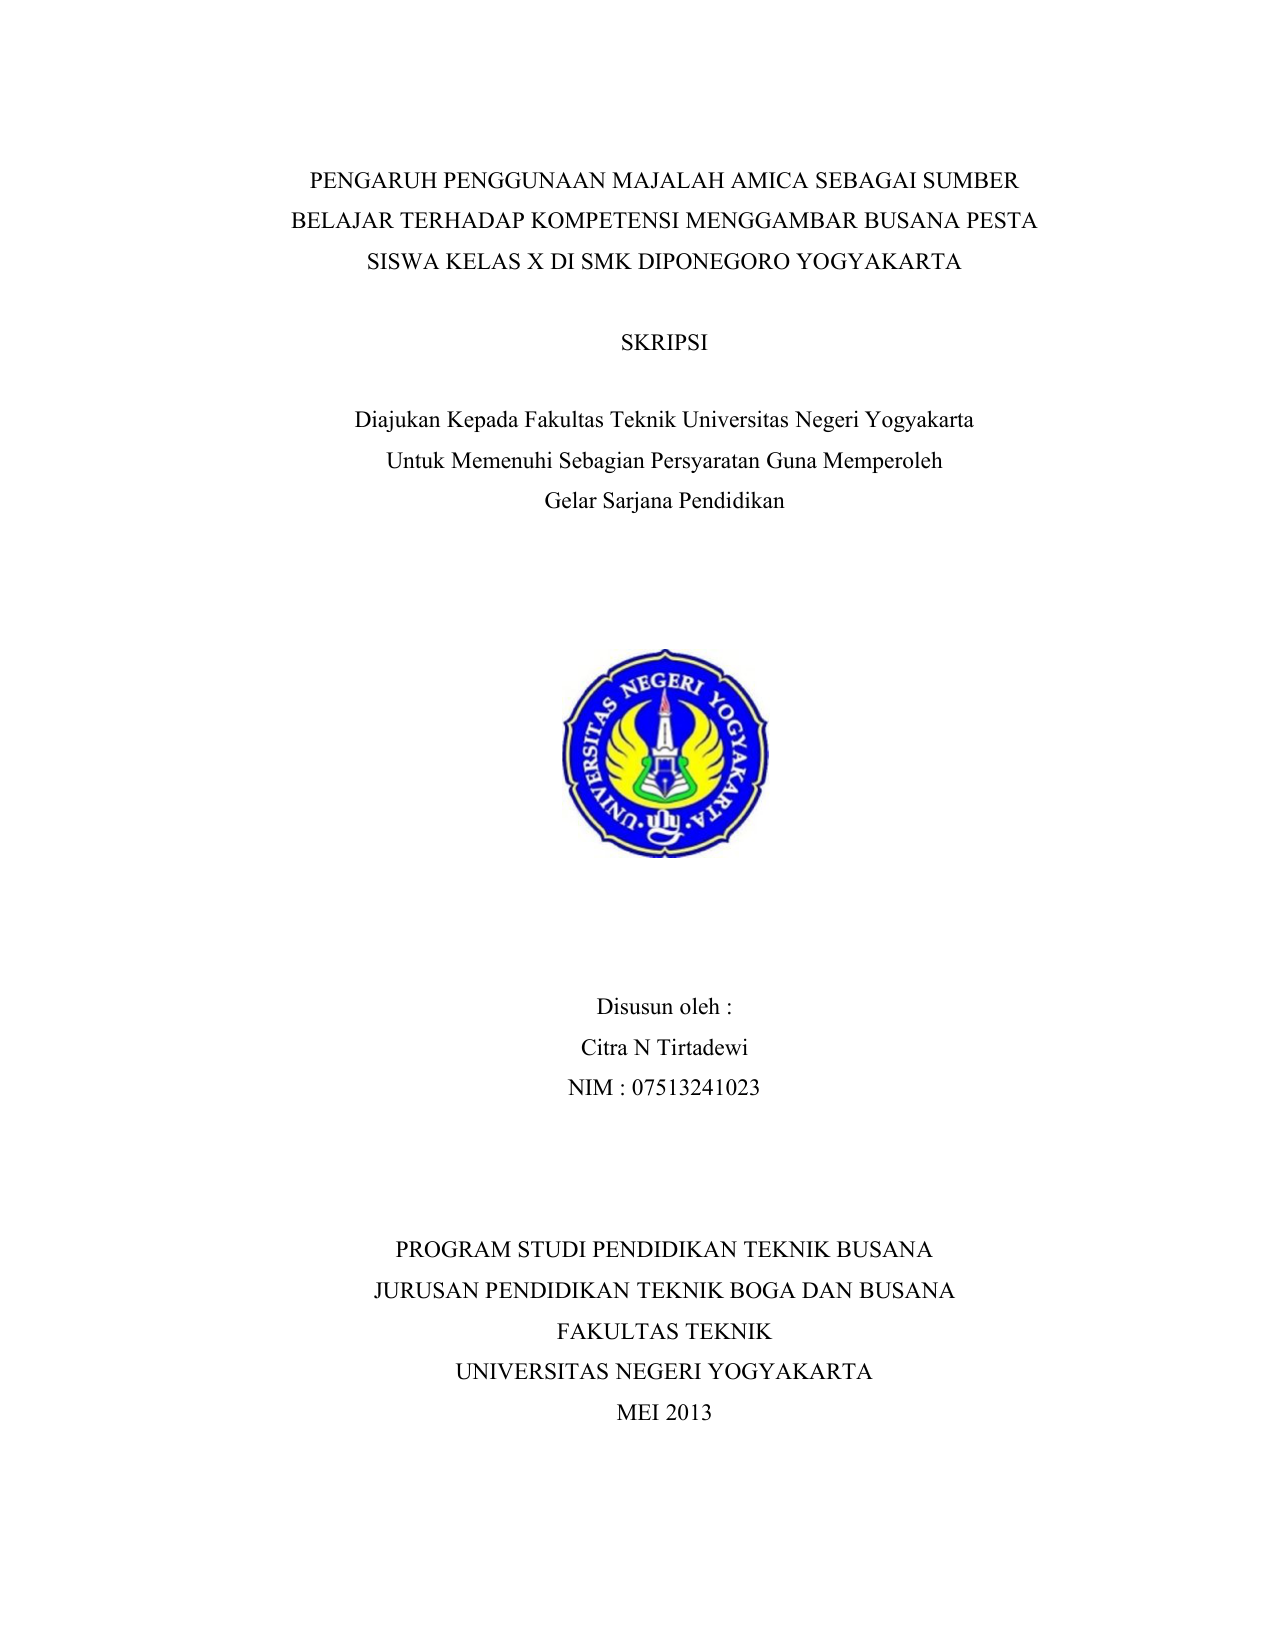 MENGGAMBAR BUSANA PESTA SISWA KELAS X DI SMK DIPONEGORO YOGYAKARTA SKRIPSI Diajukan Kepada Fakultas Teknik Universitas Negeri Yogyakarta Untuk Memenuhi